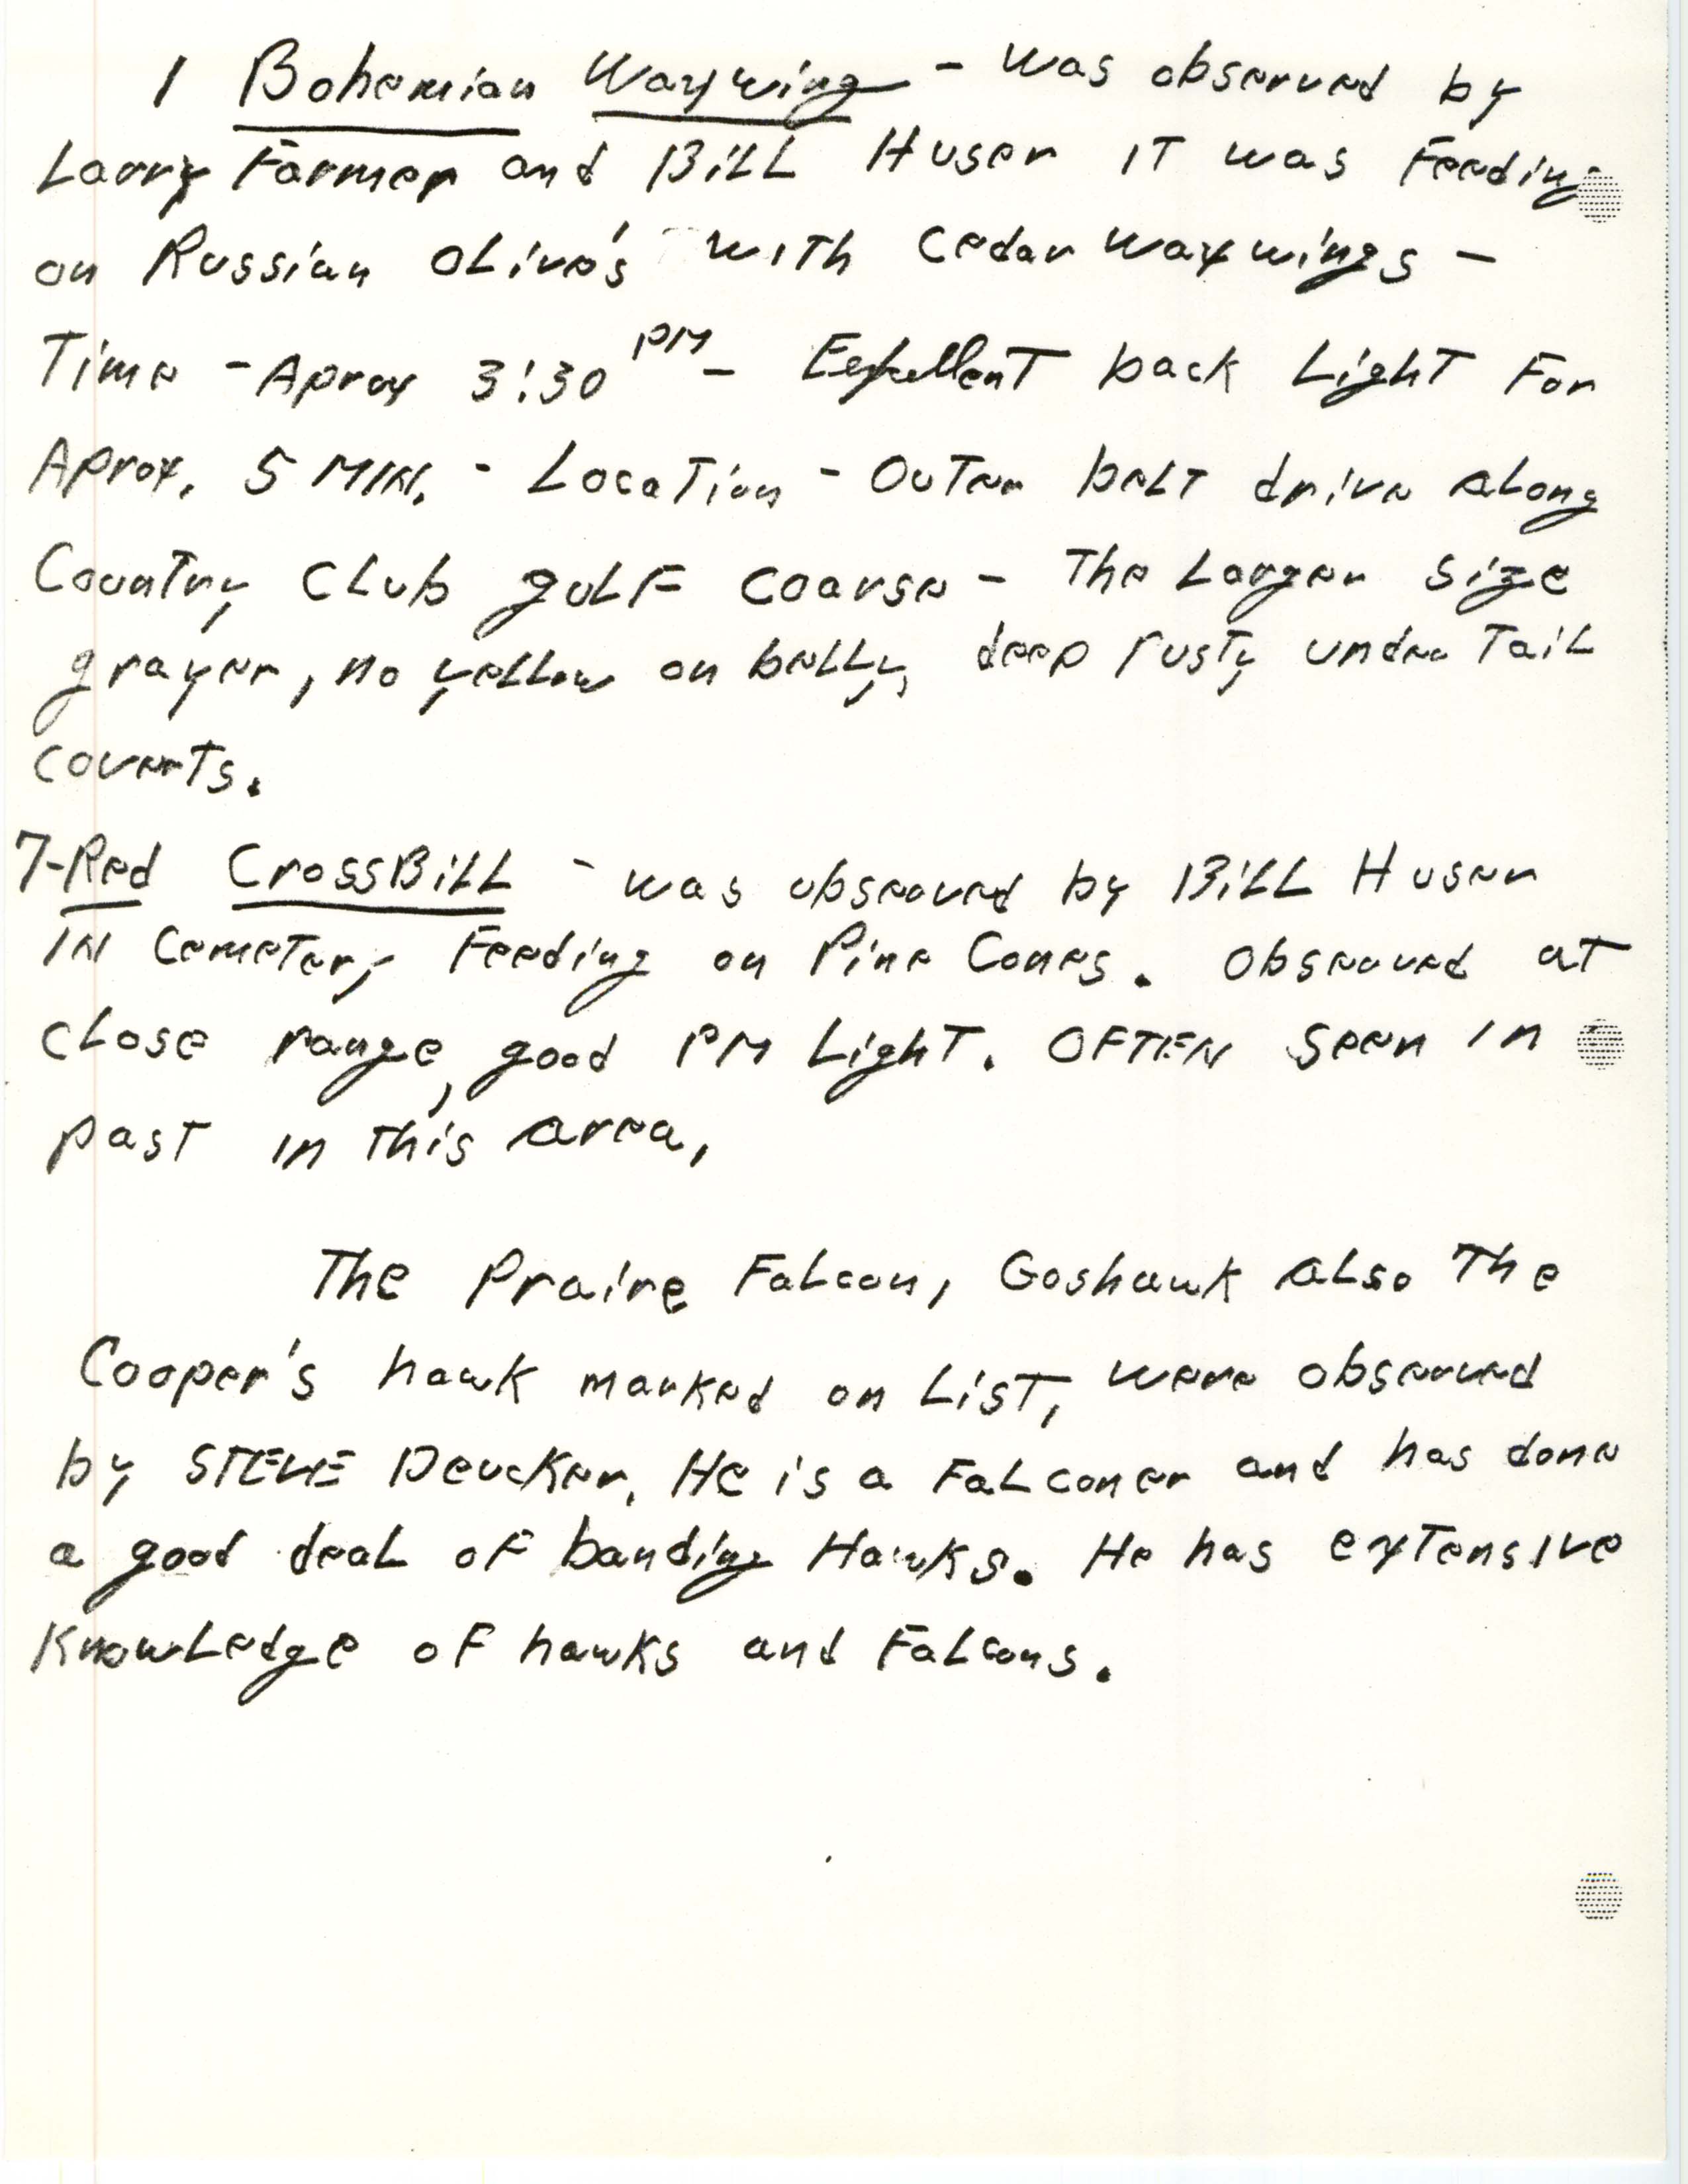 Field notes by Richard Nicholson, December 19, 1981